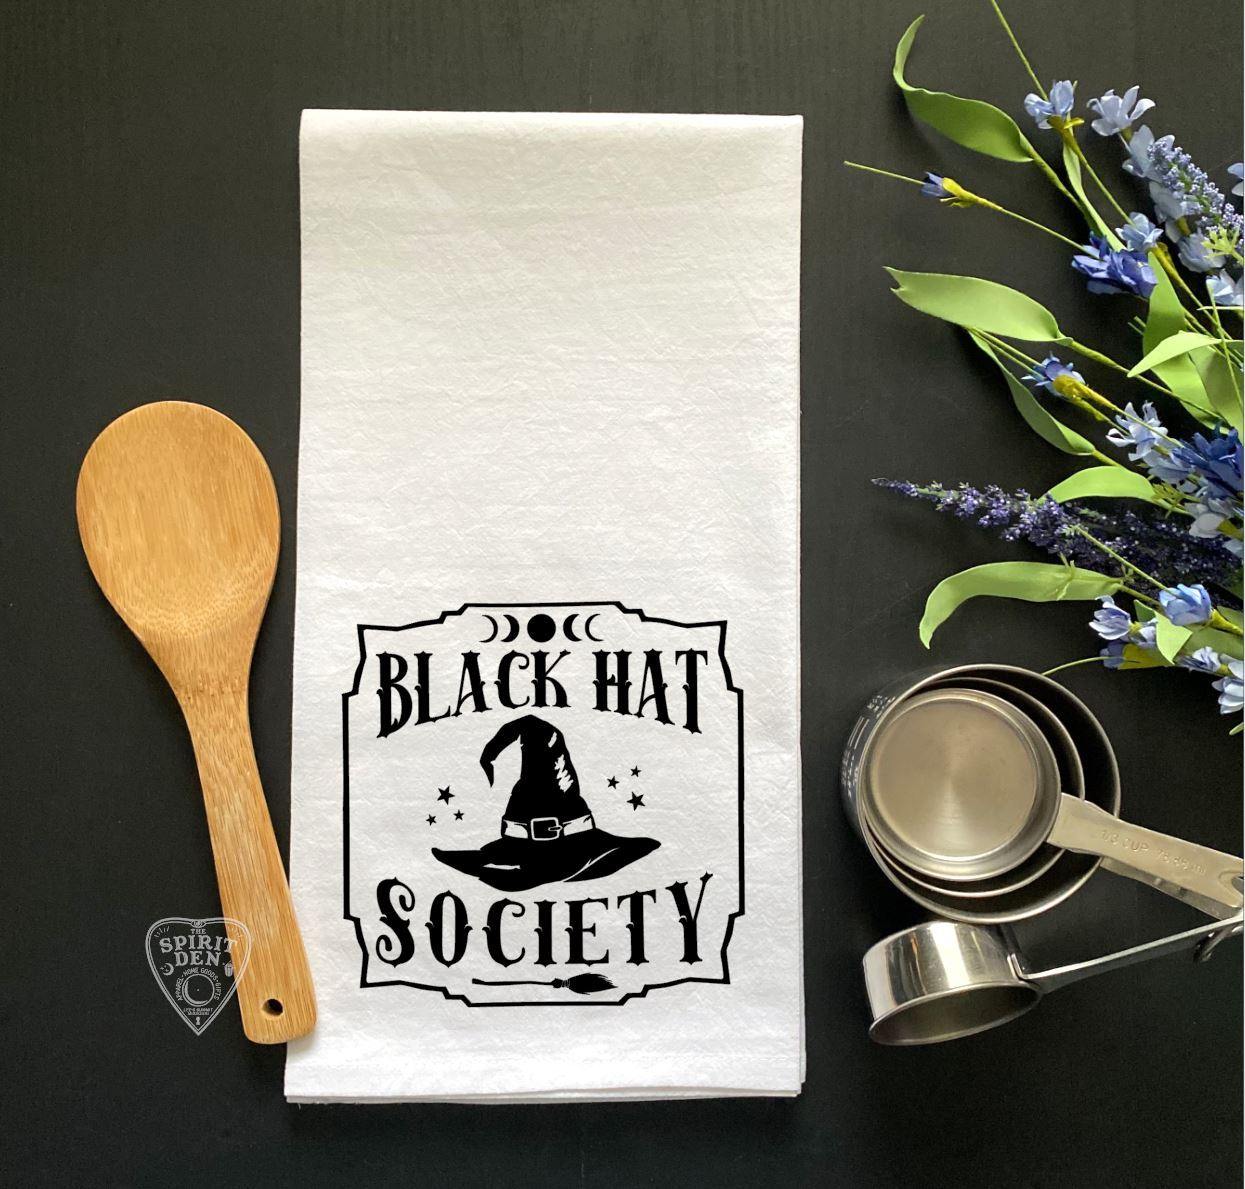 Black Hat Society Witch Hat Flour Sack Towel – The Spirit Den